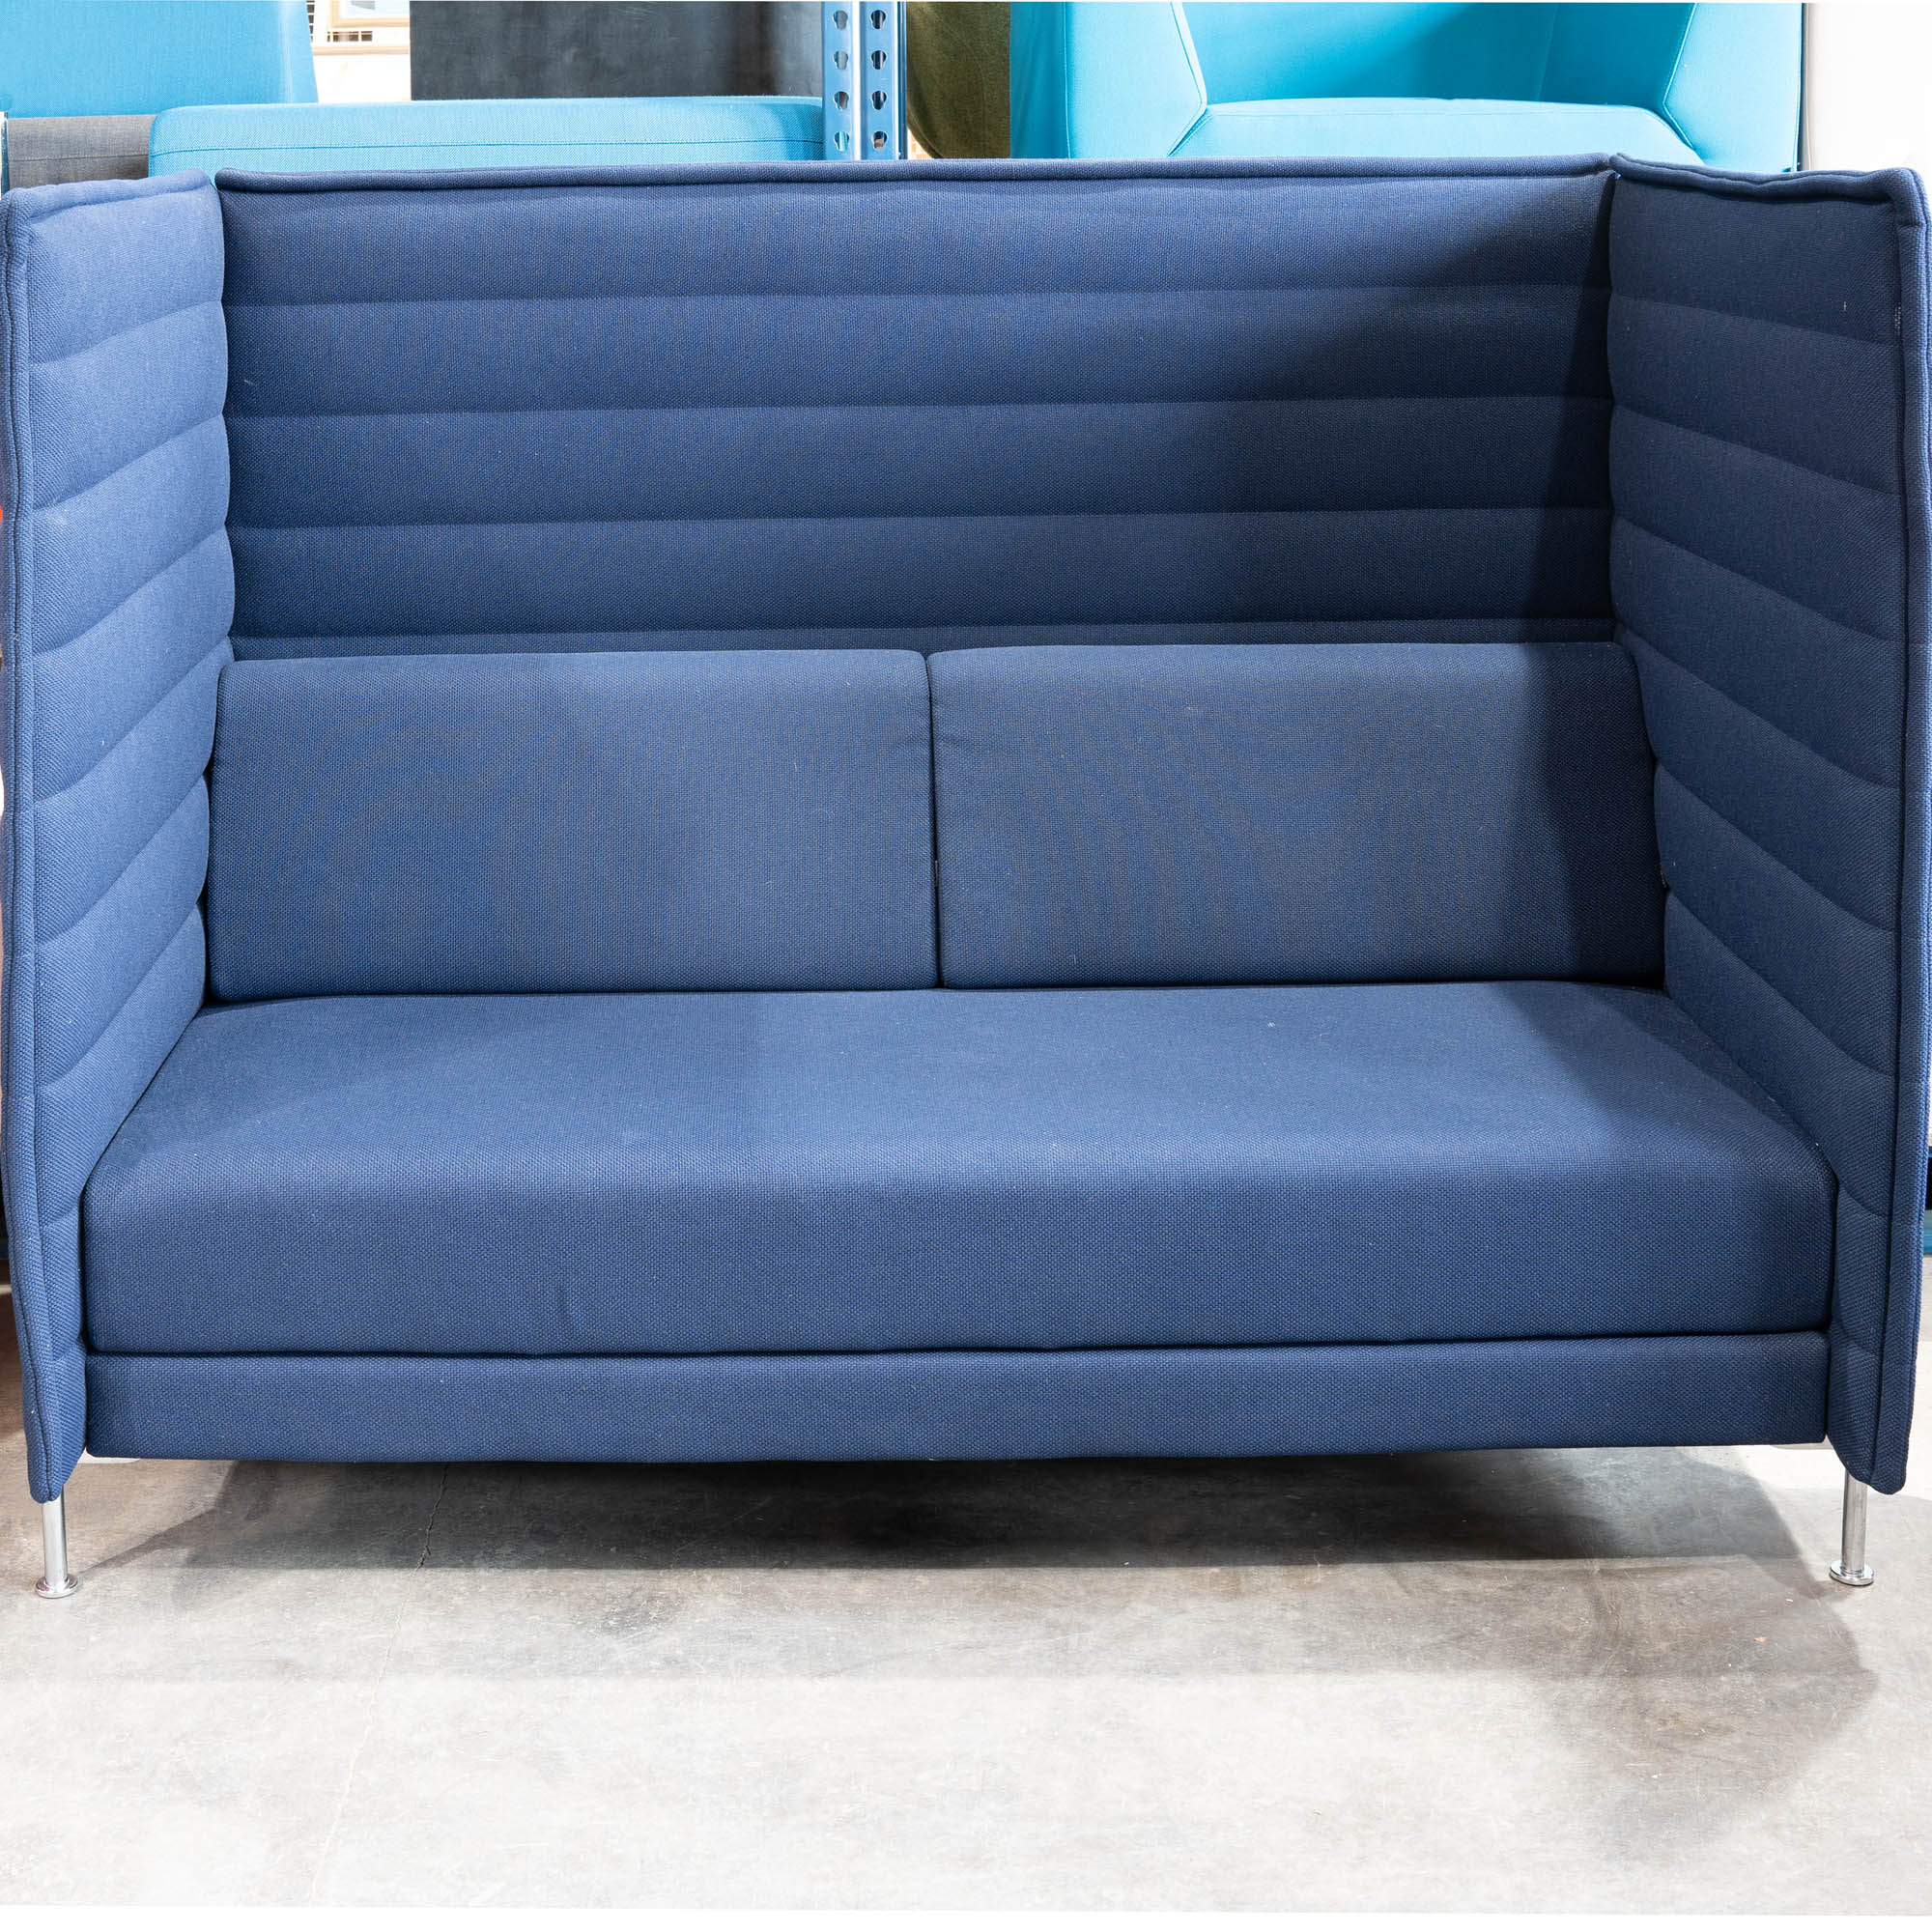 Vitra Alcove Highback Sofa blau - 150 x 140 x 80 cm - Zweisitzer 